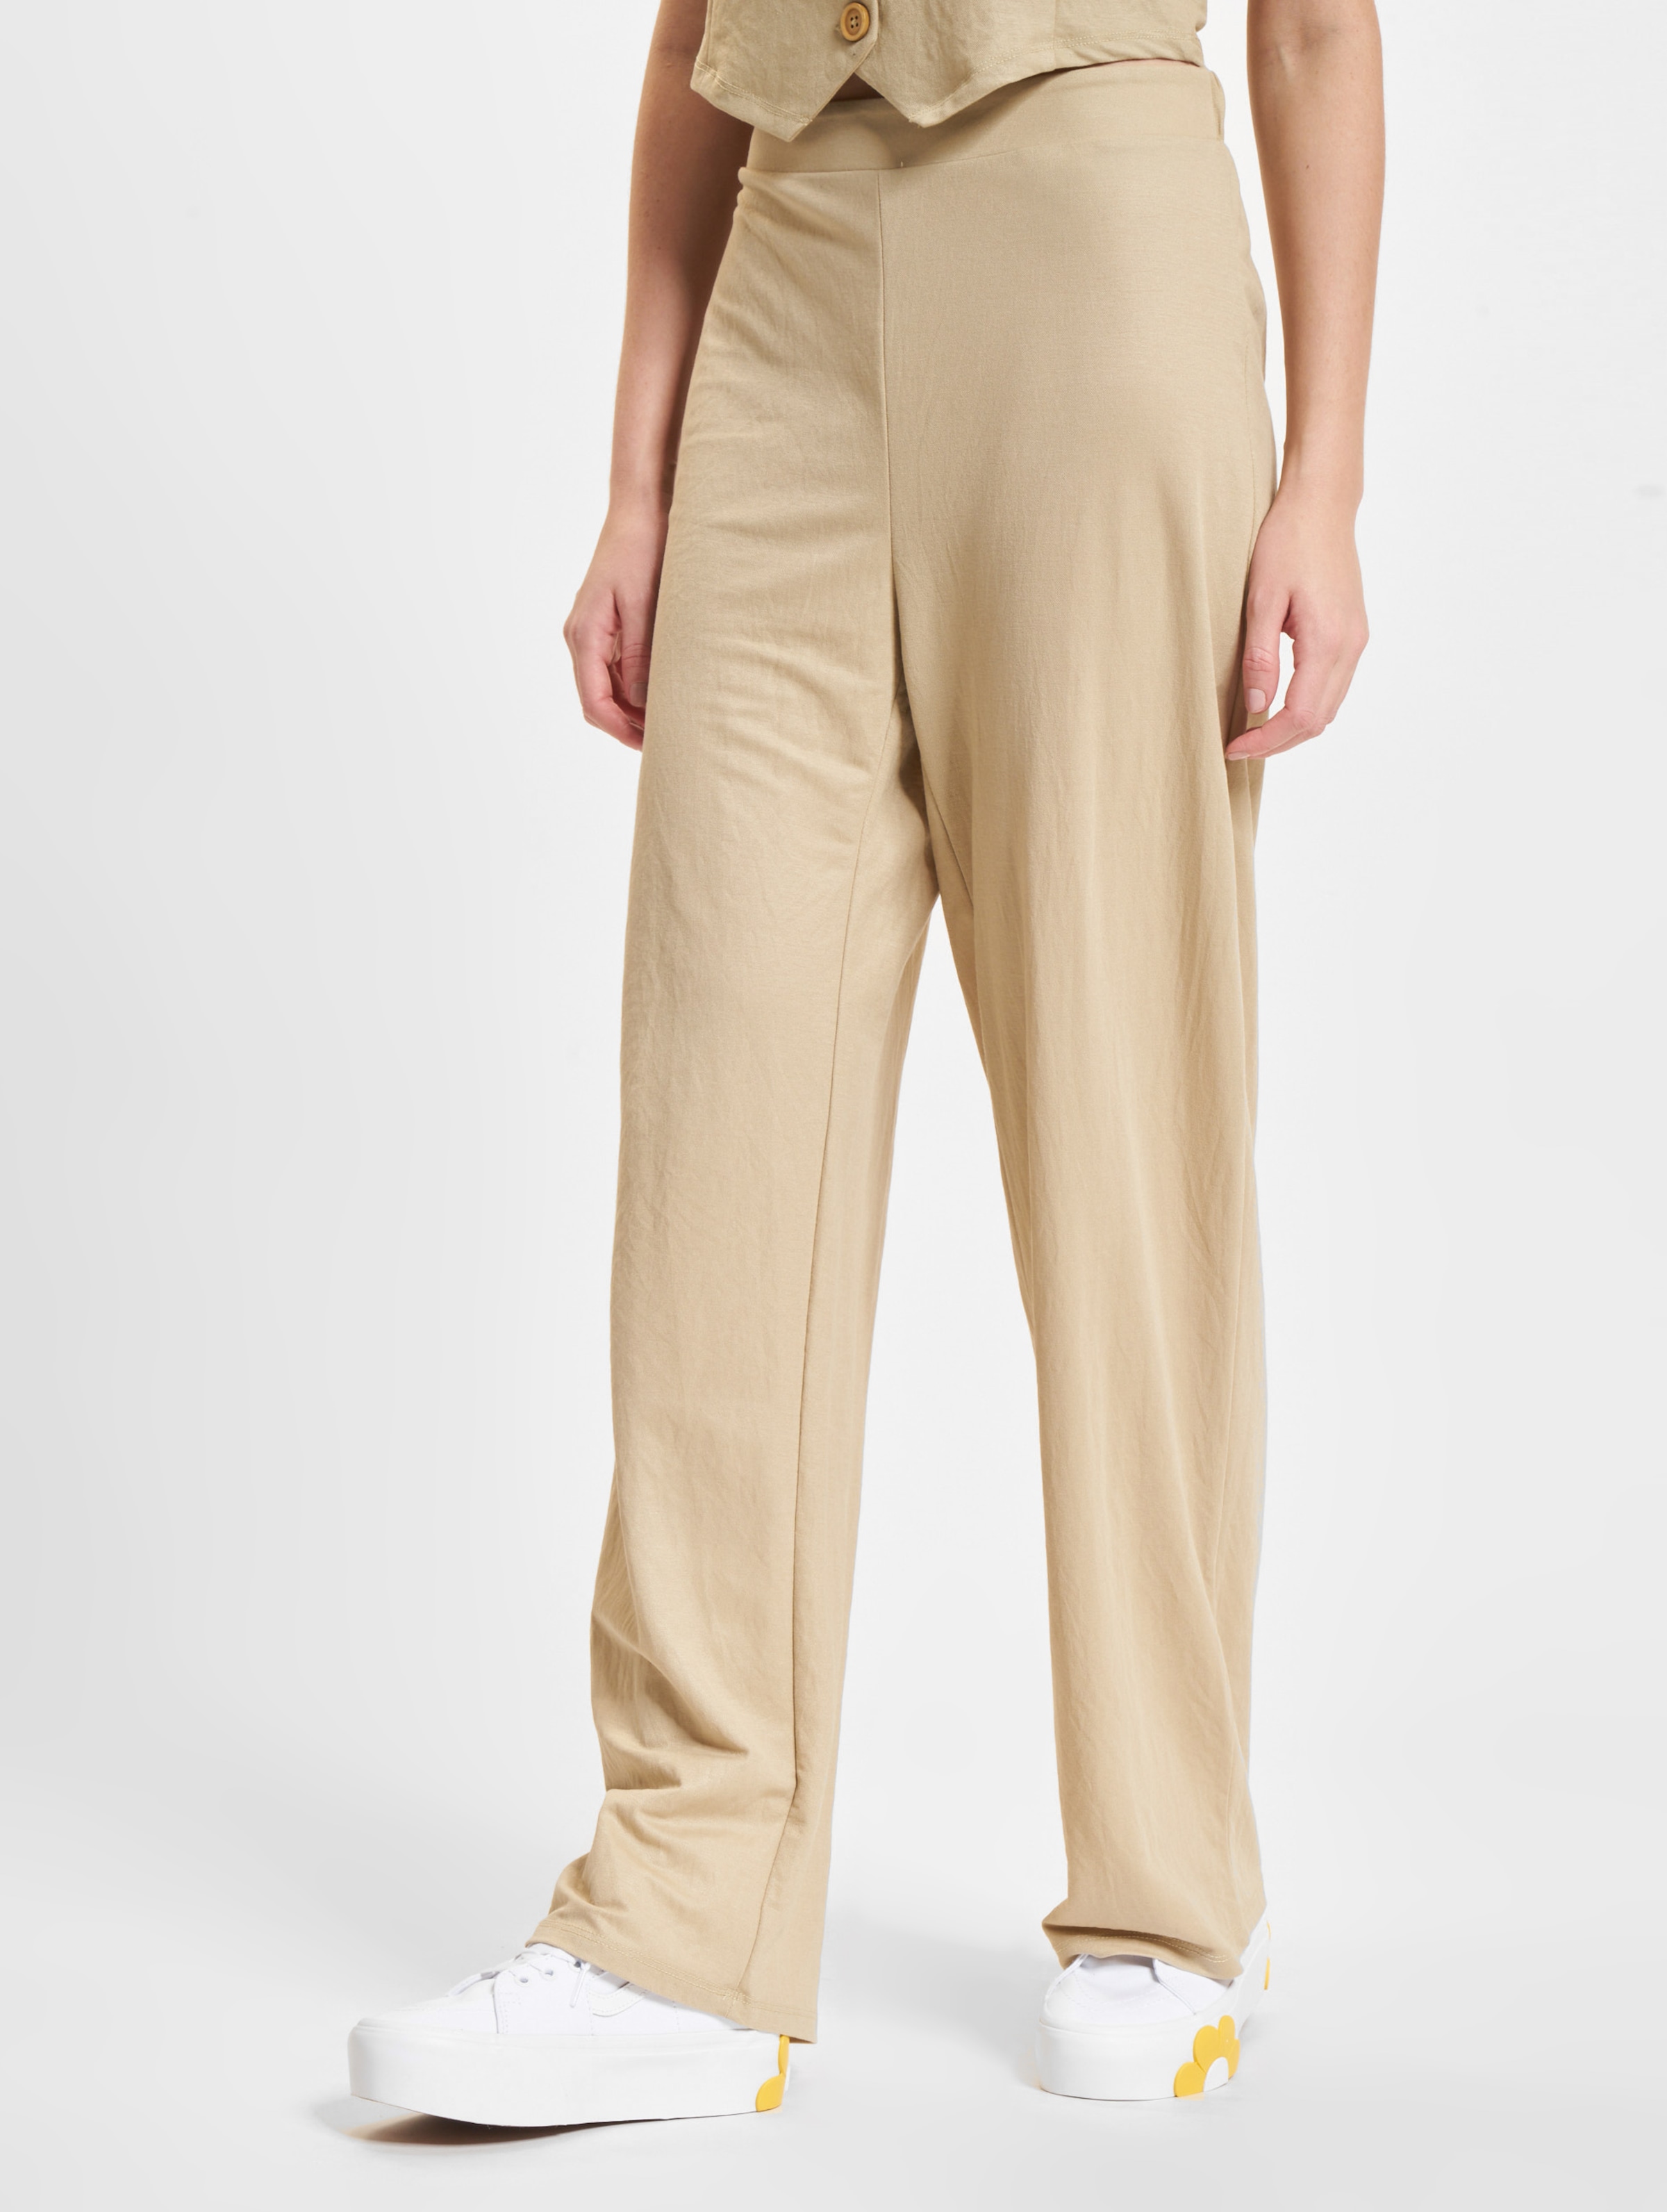 Only Jany Jersey Pants Frauen,Unisex op kleur beige, Maat S